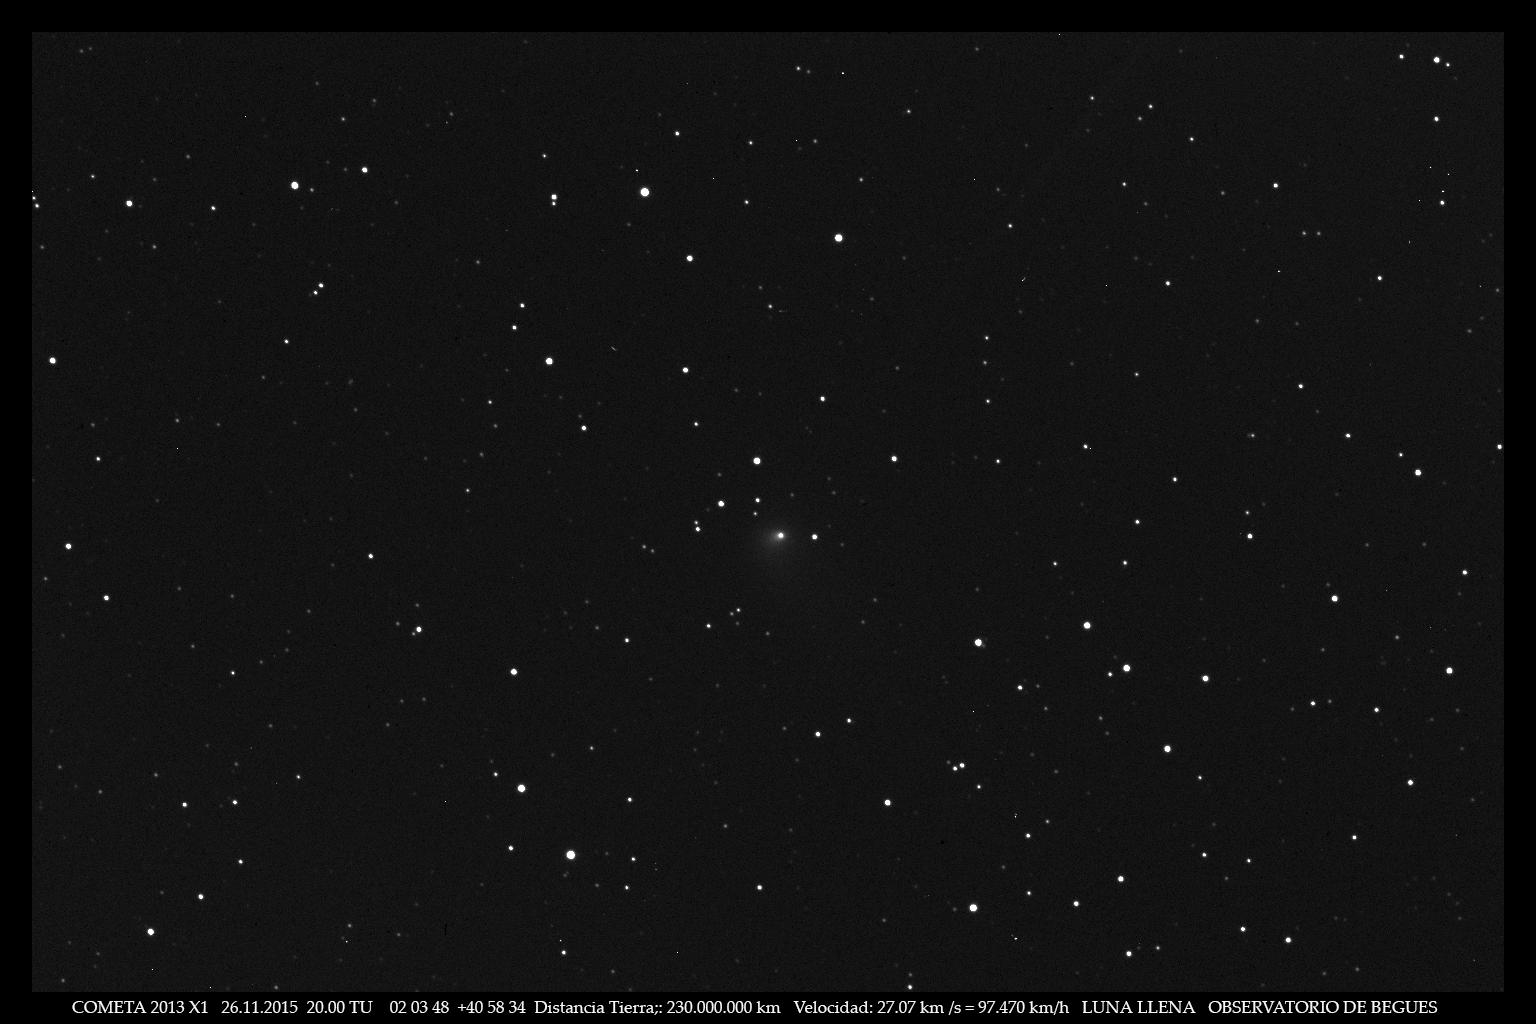 Cometa 2013 X1 26 11 2015 full moon